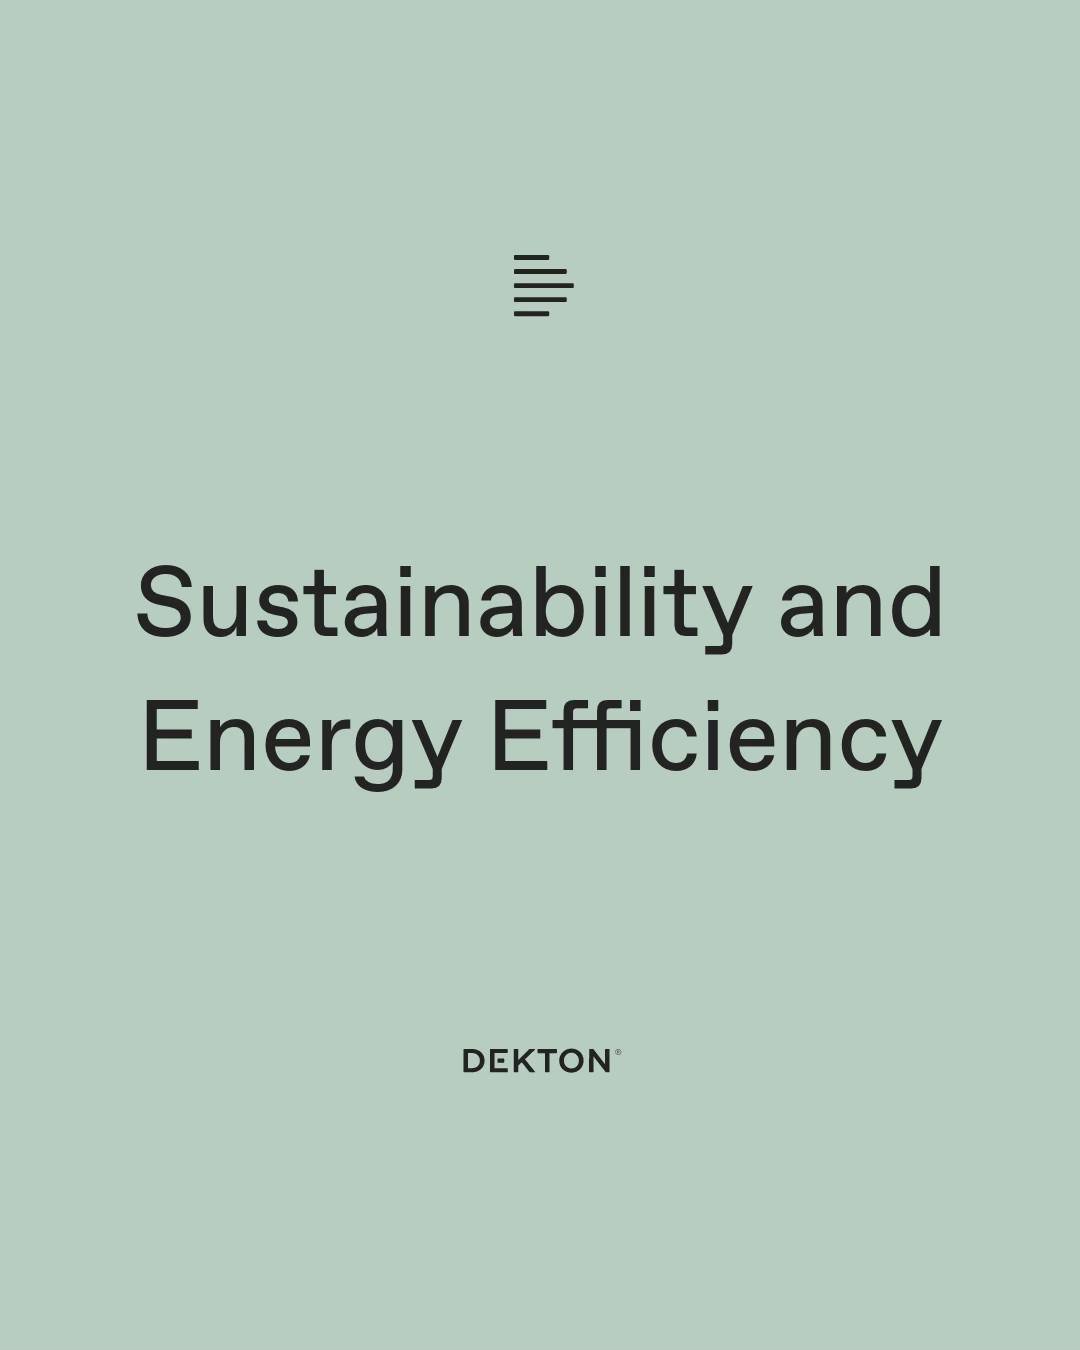 Dekton-Sustainability.jpeg